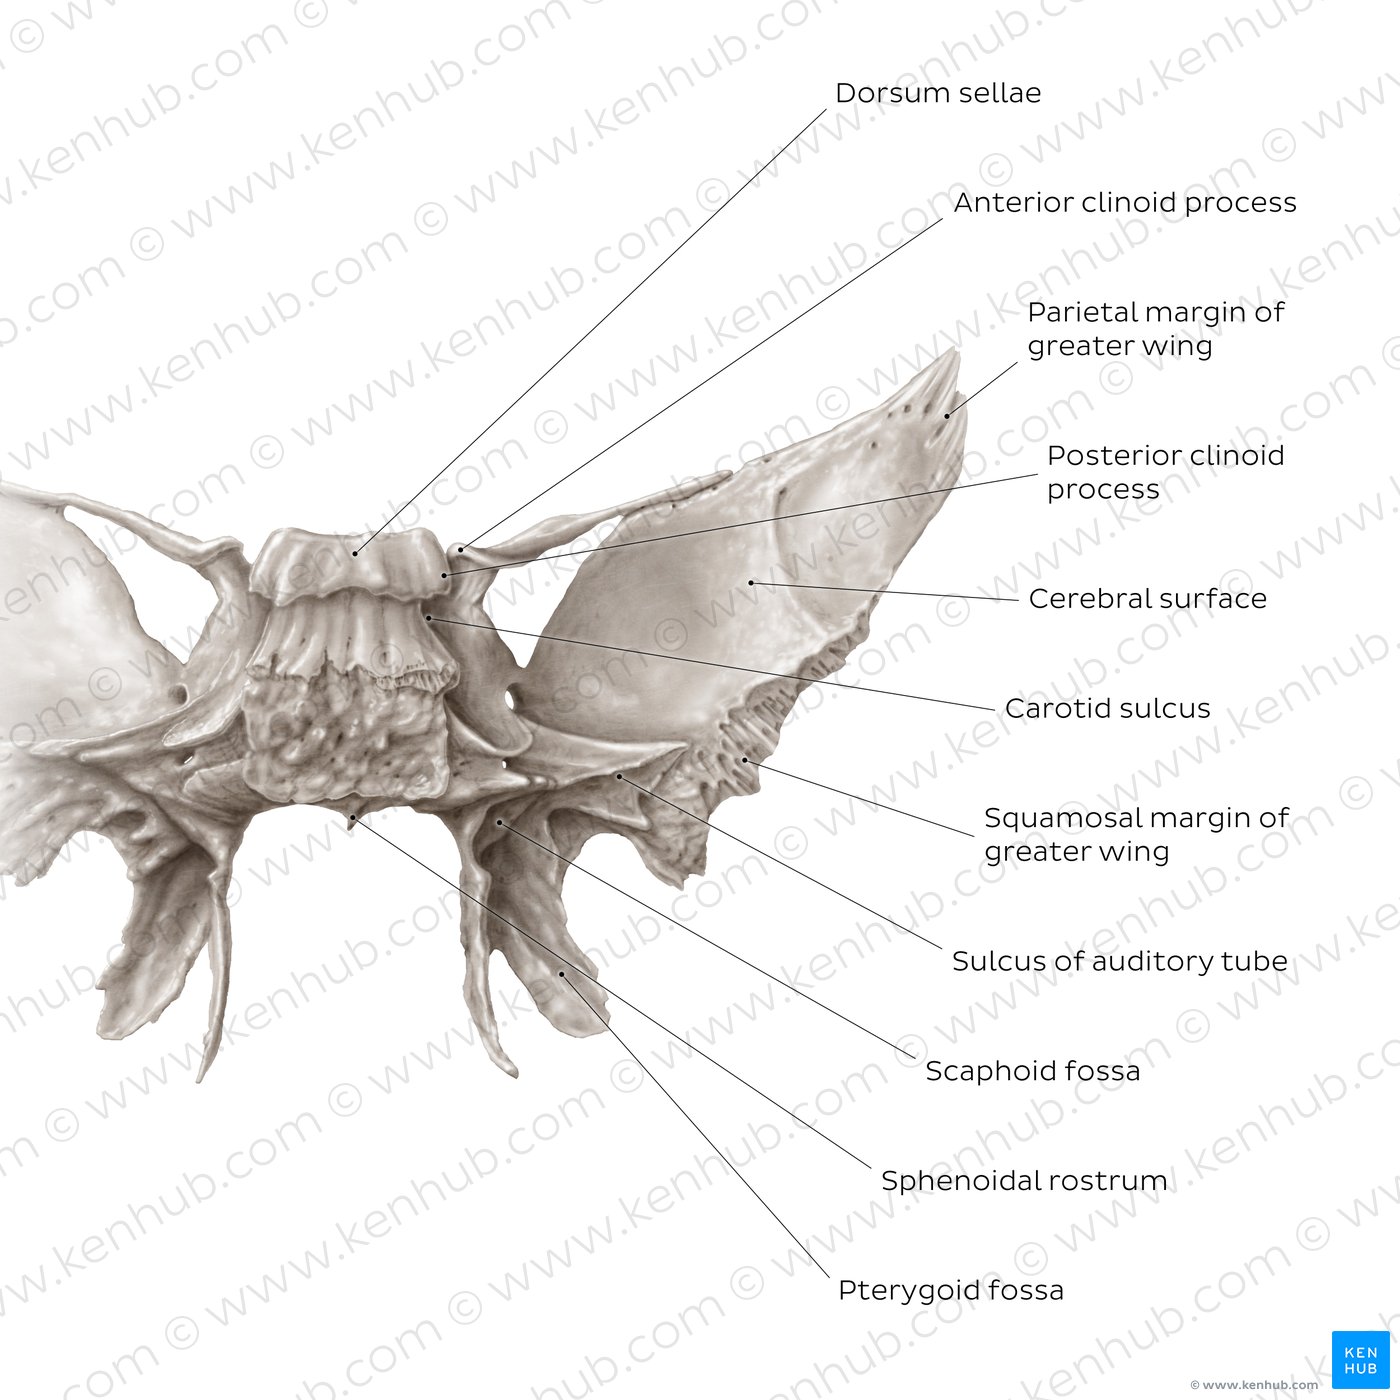 Sphenoid bone (posterior view)